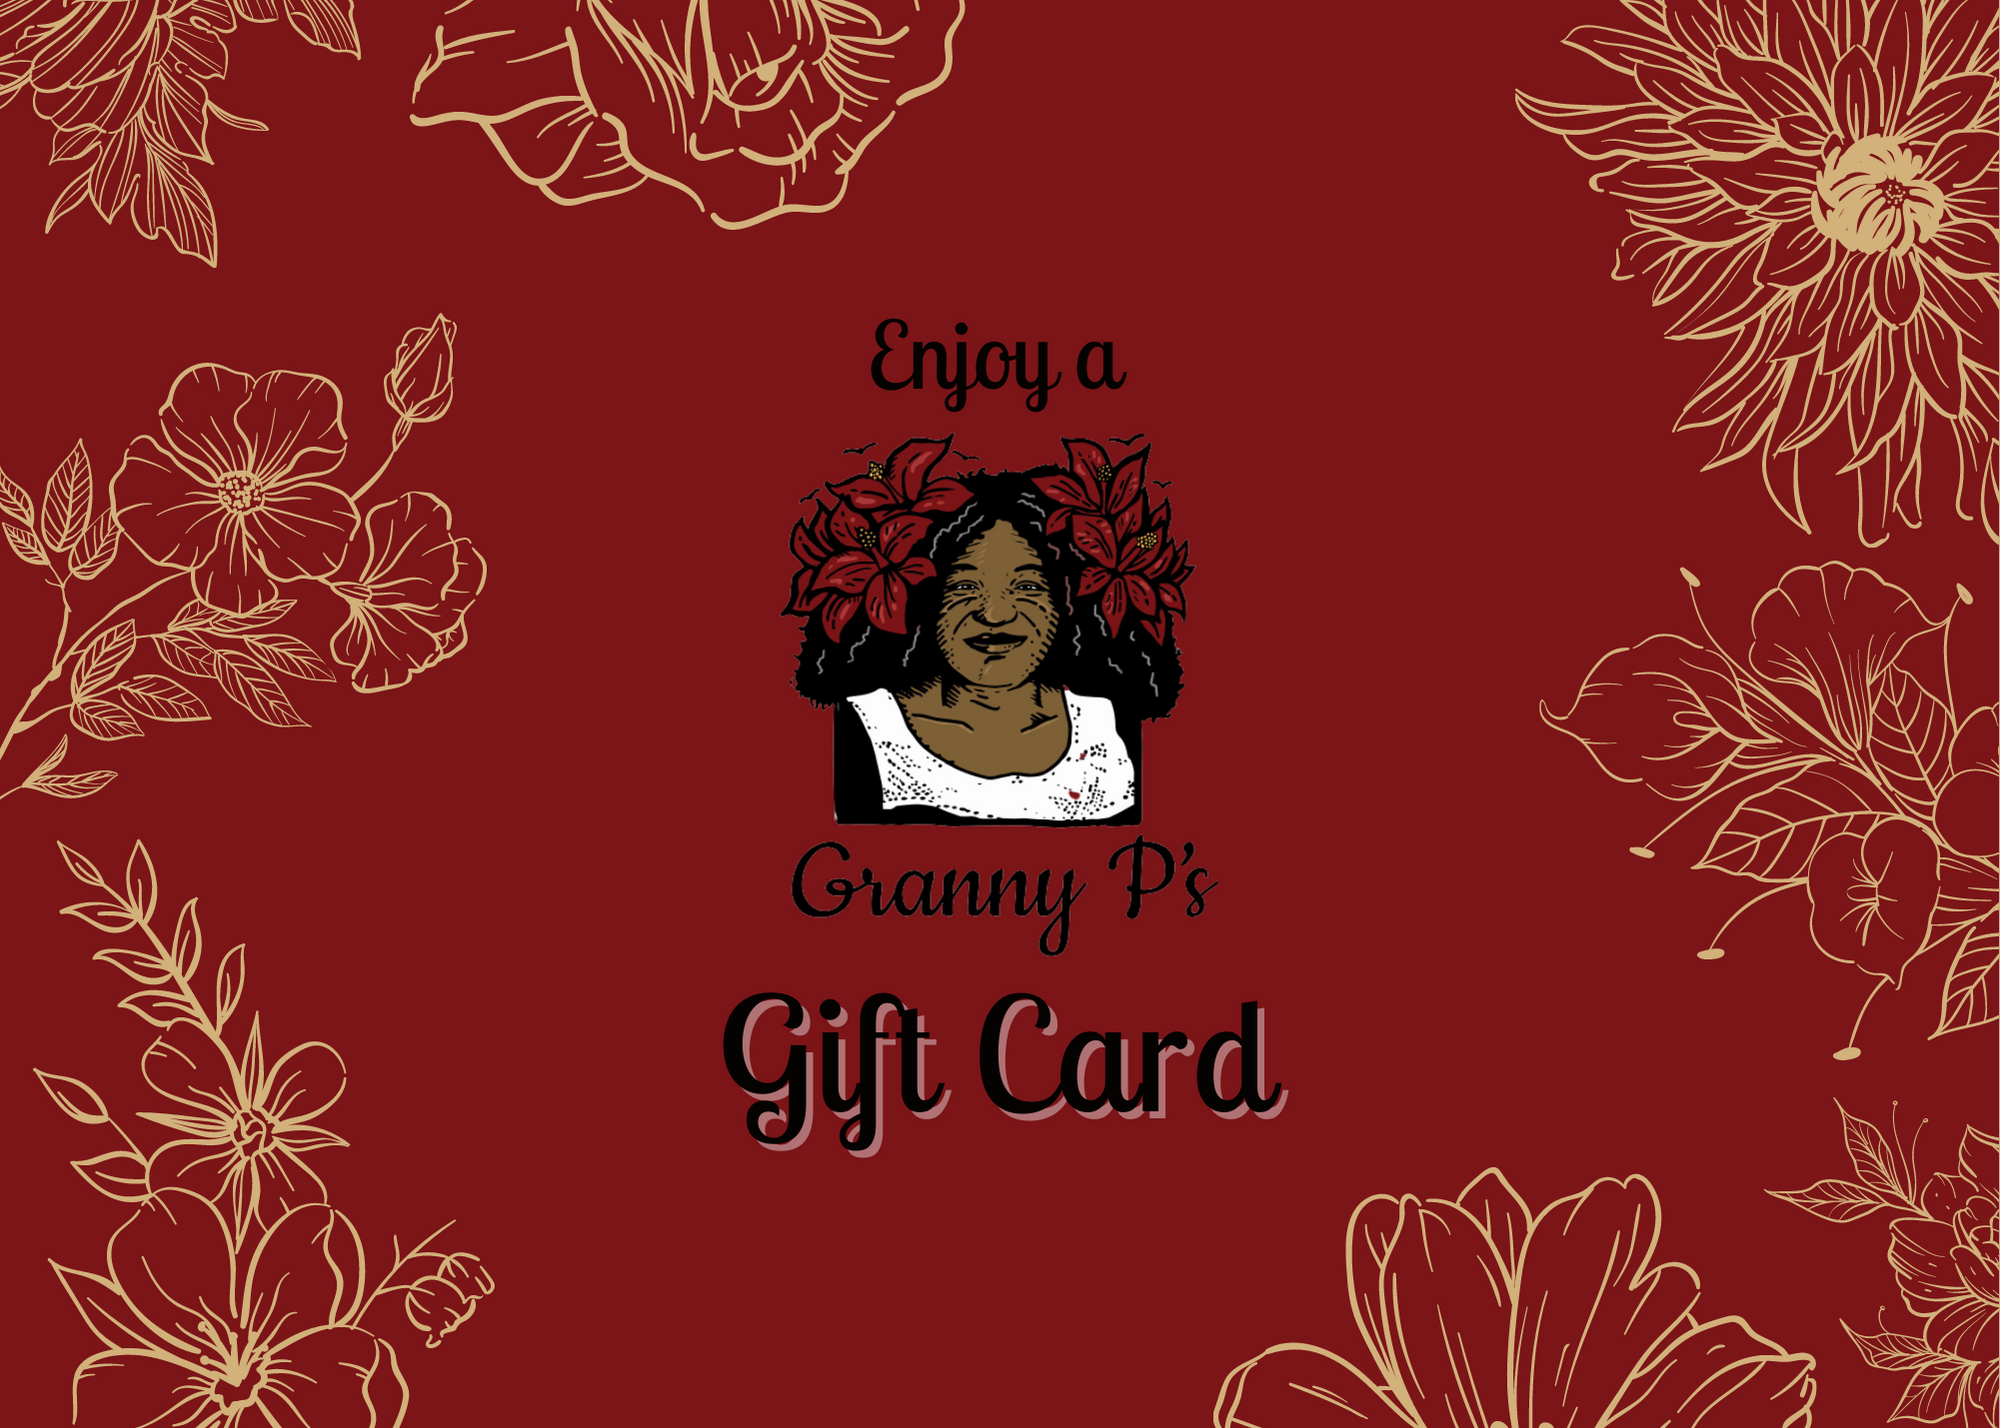 Granny P's Gift Card